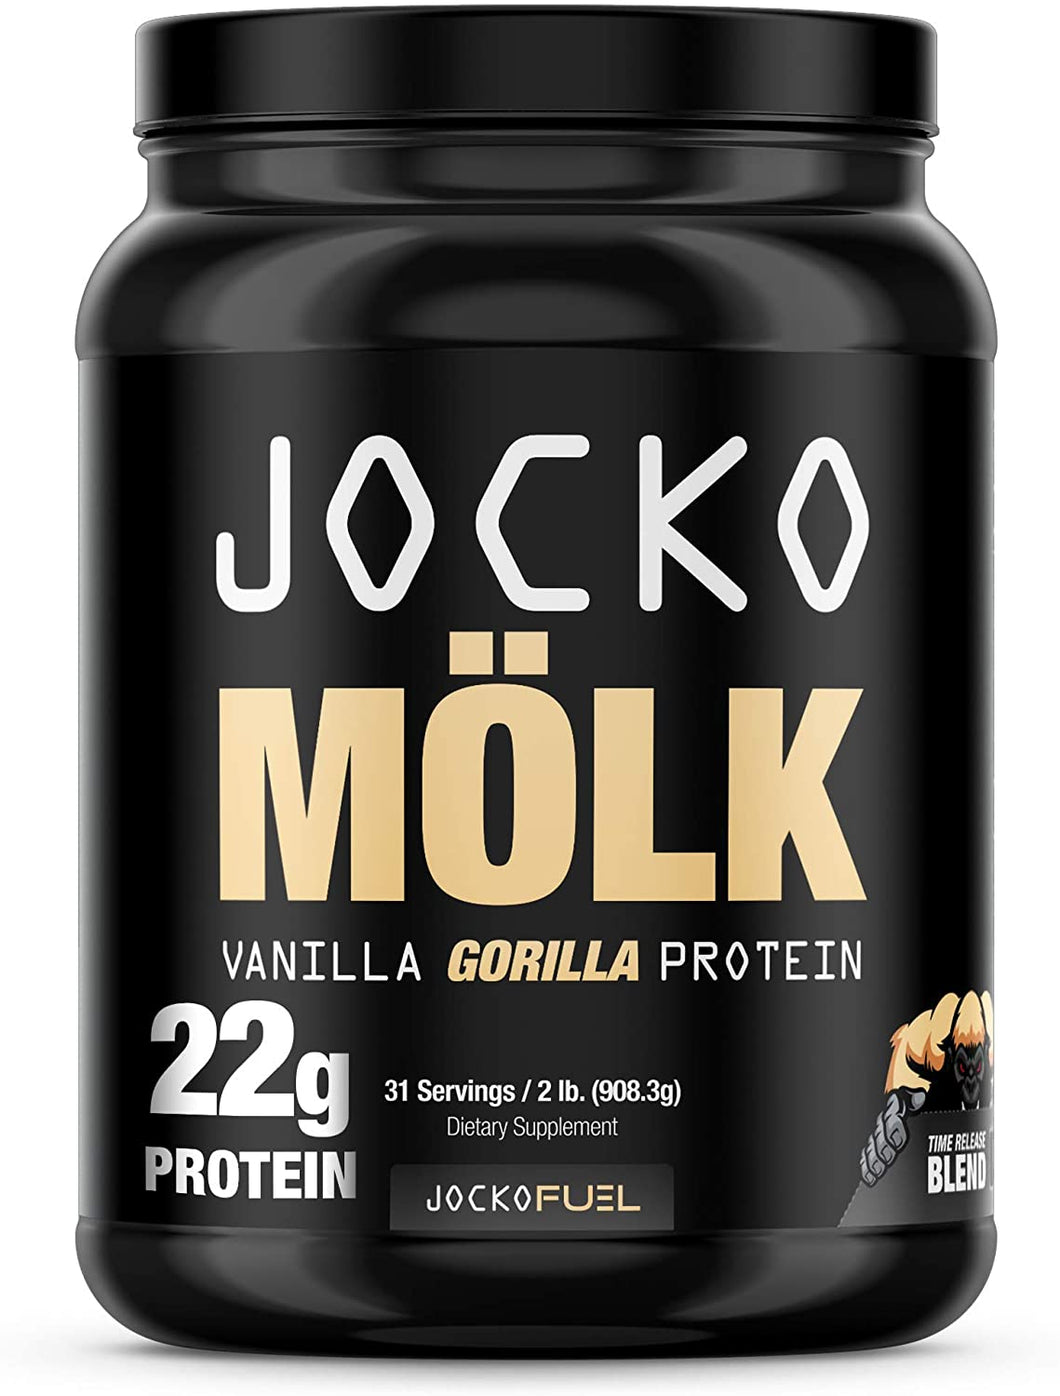 Jocko MOLK By Jocko Fuel